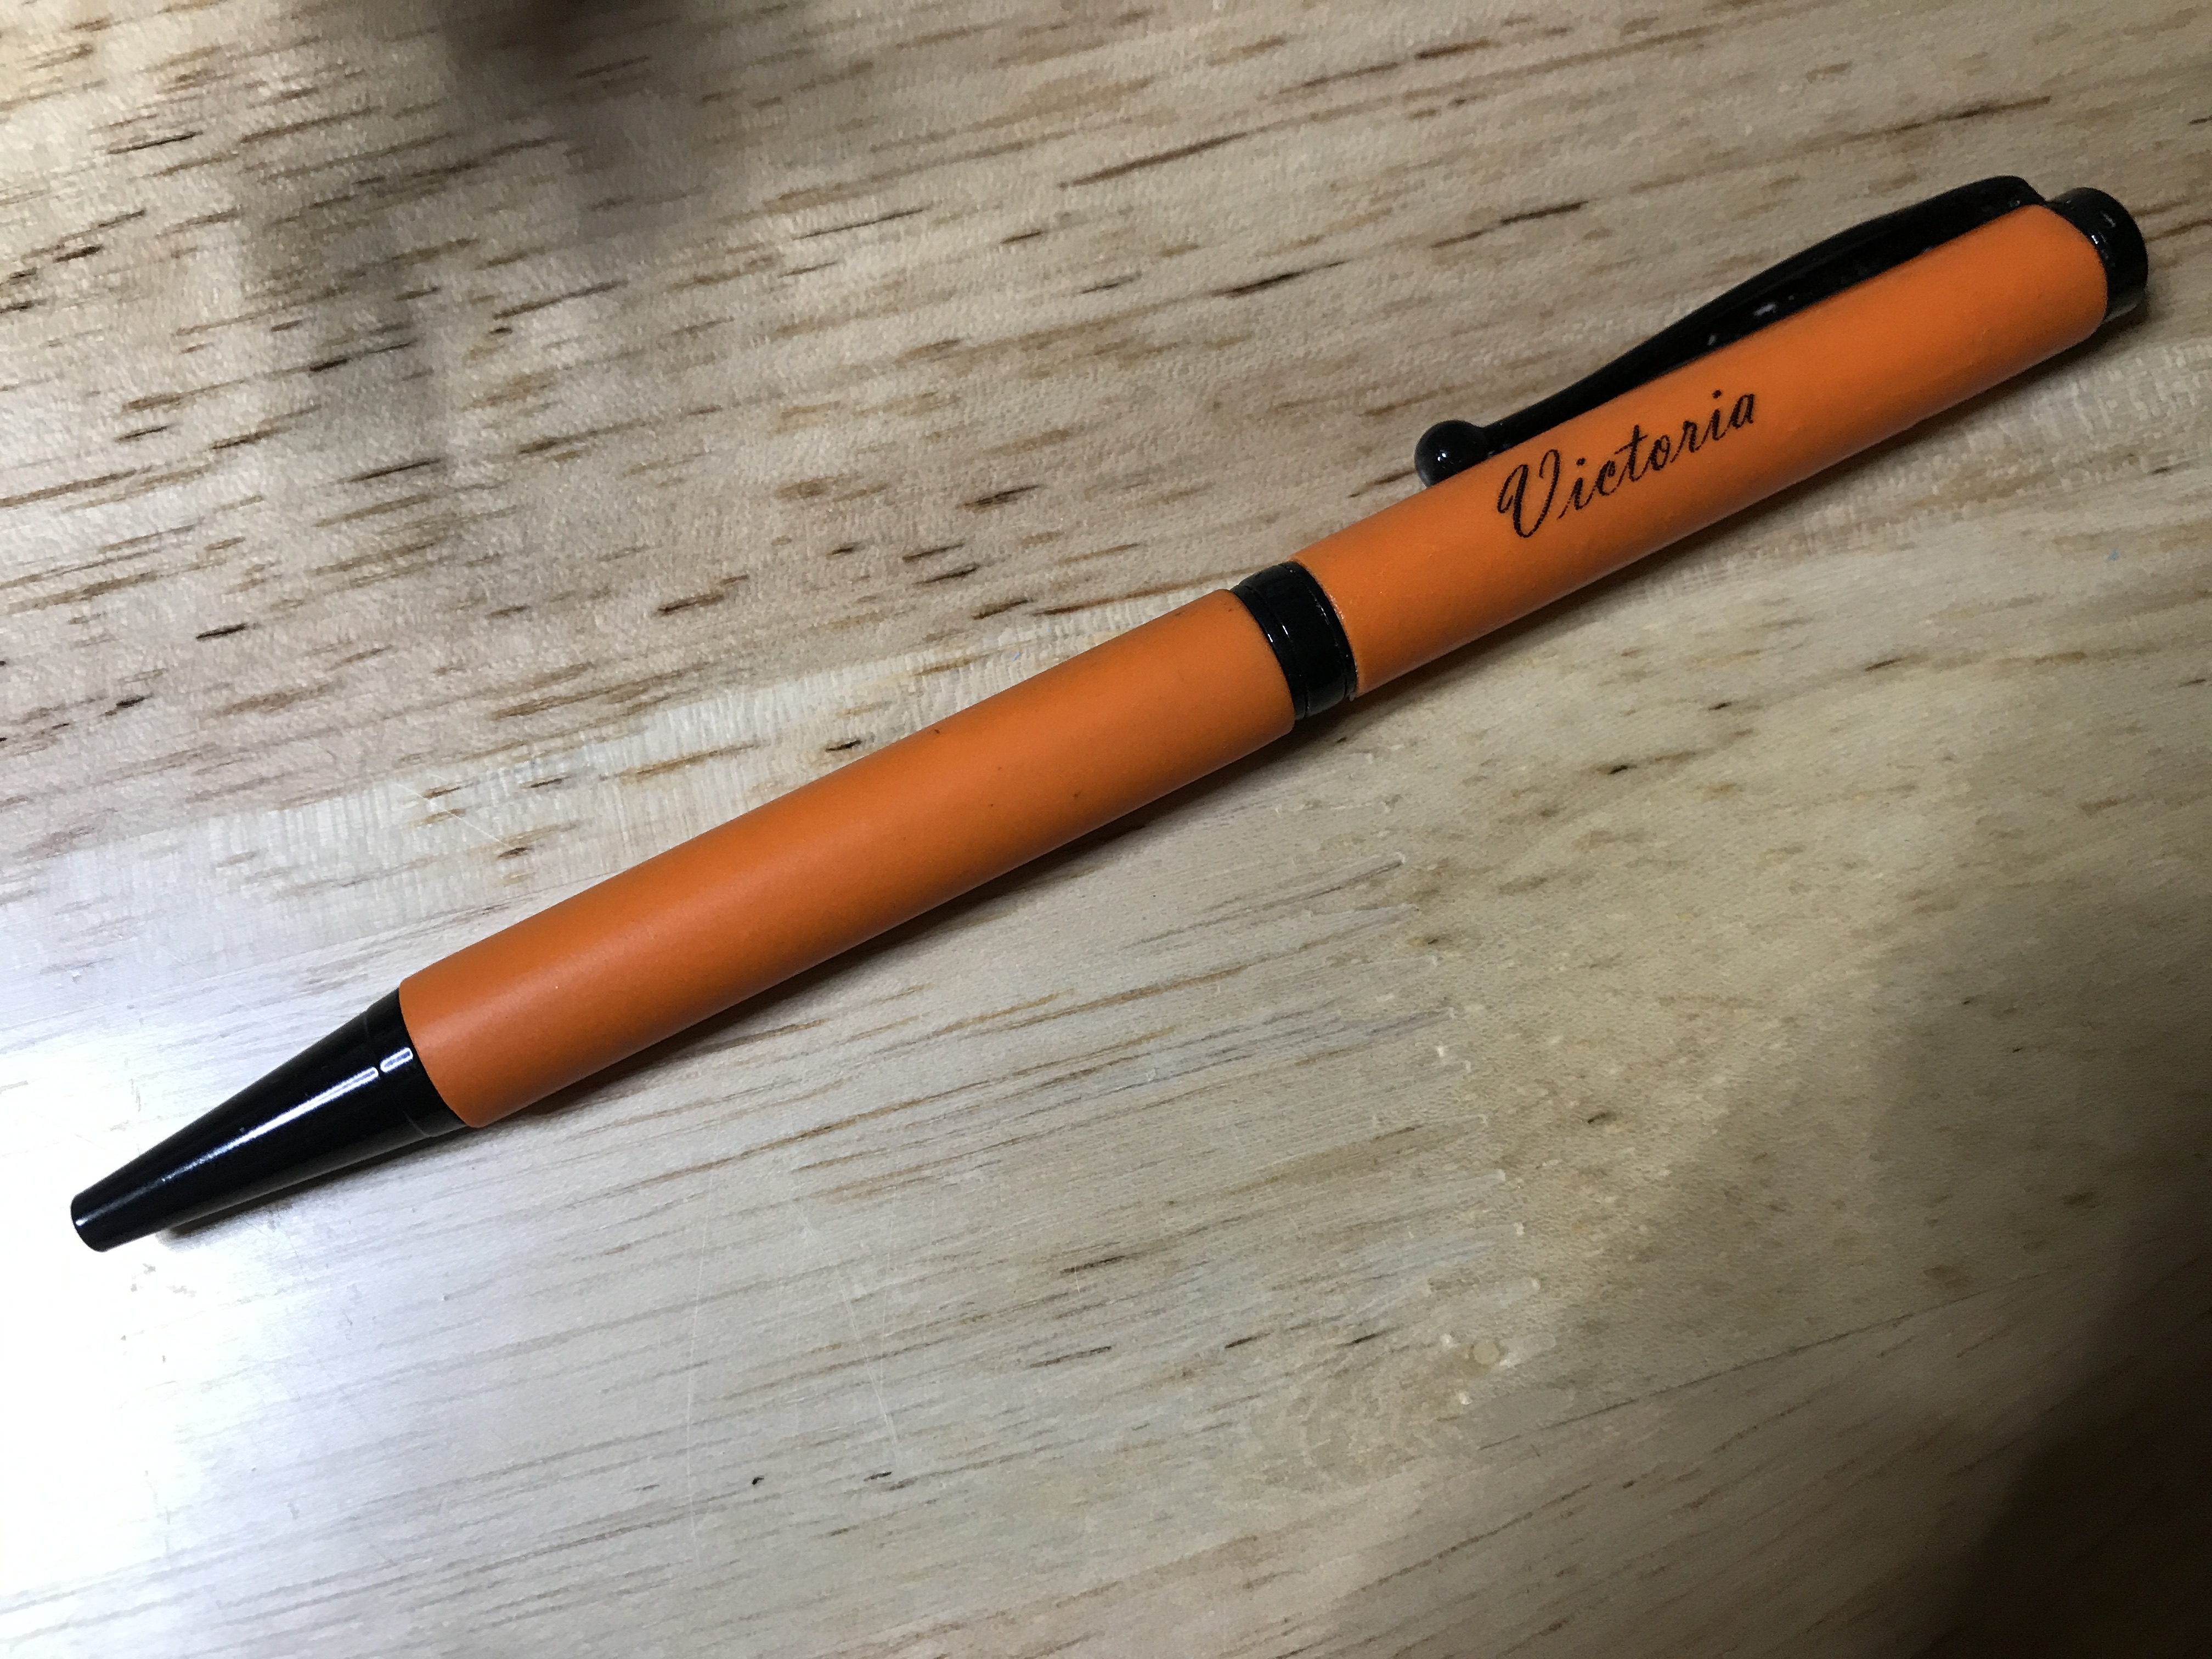 Personalized Slimline Polymer Clay Pen